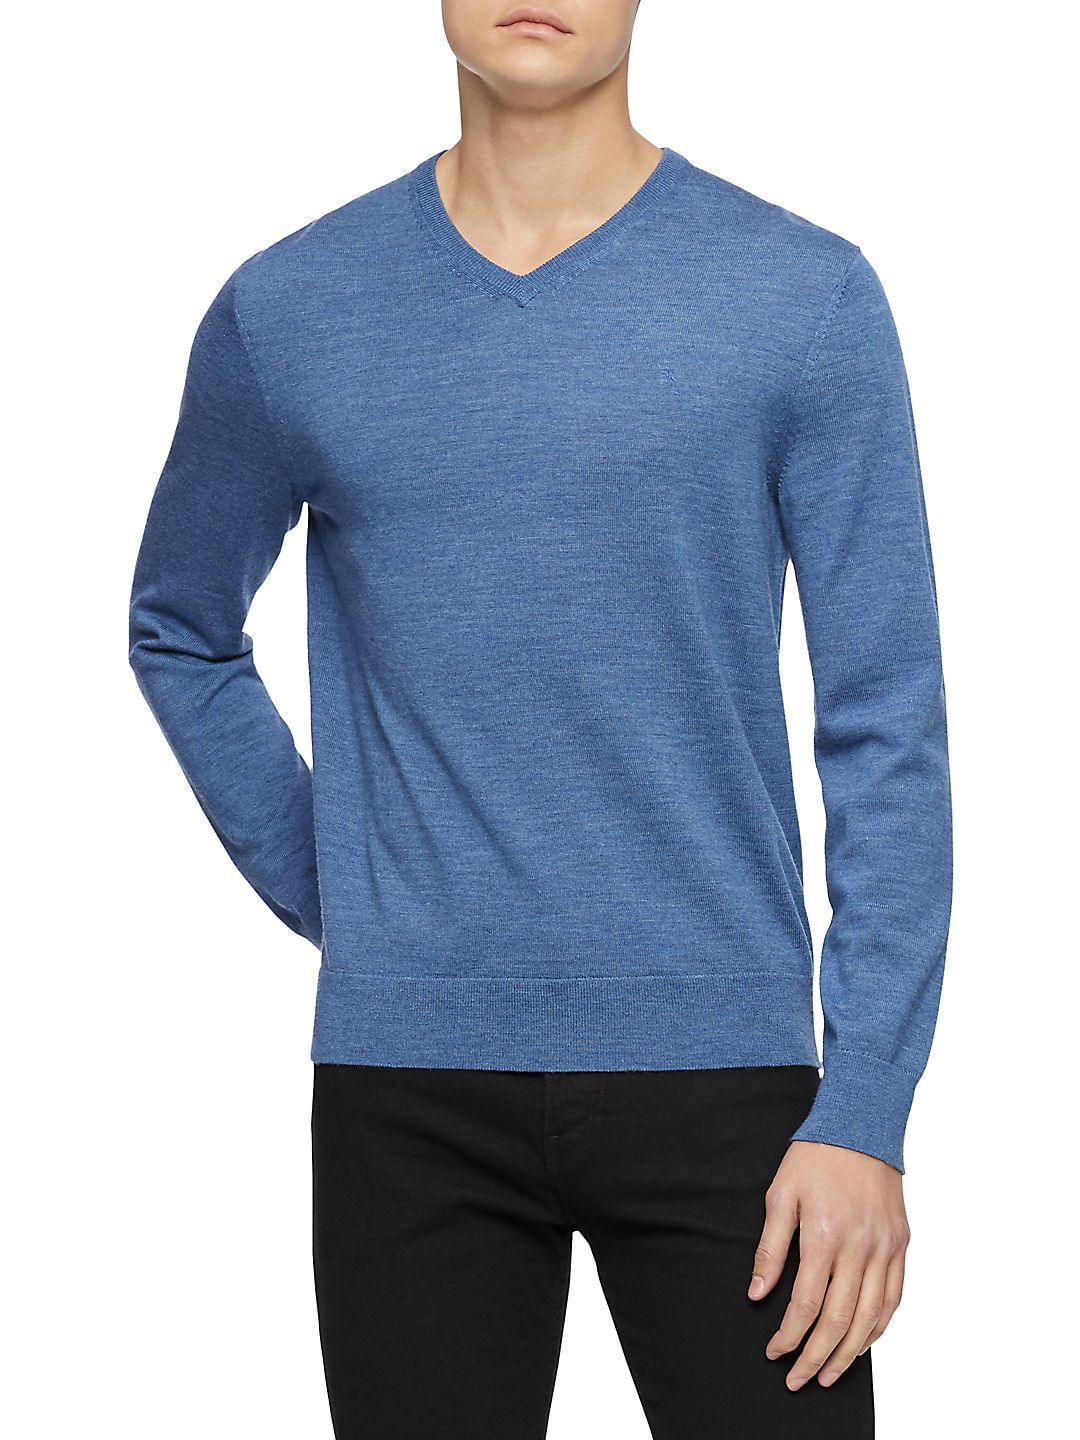 Merino V-Neck Sweater - Walmart.com